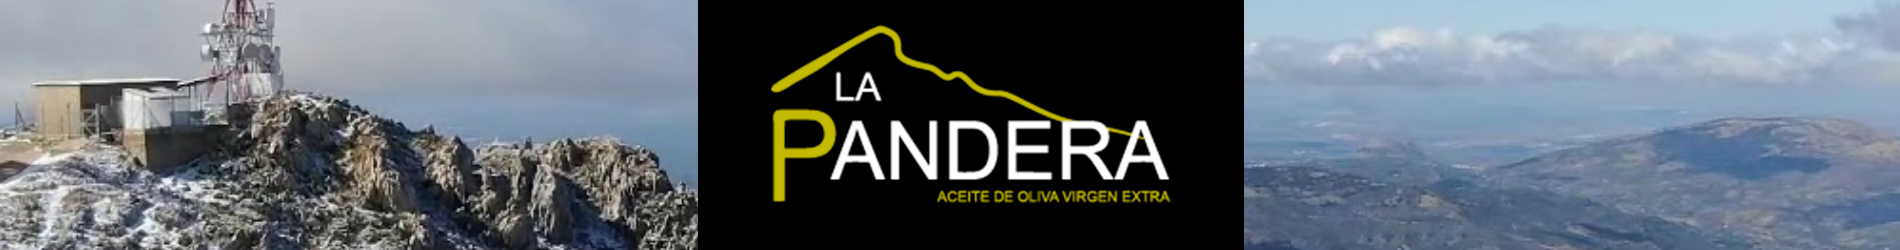 banner_la_pandera